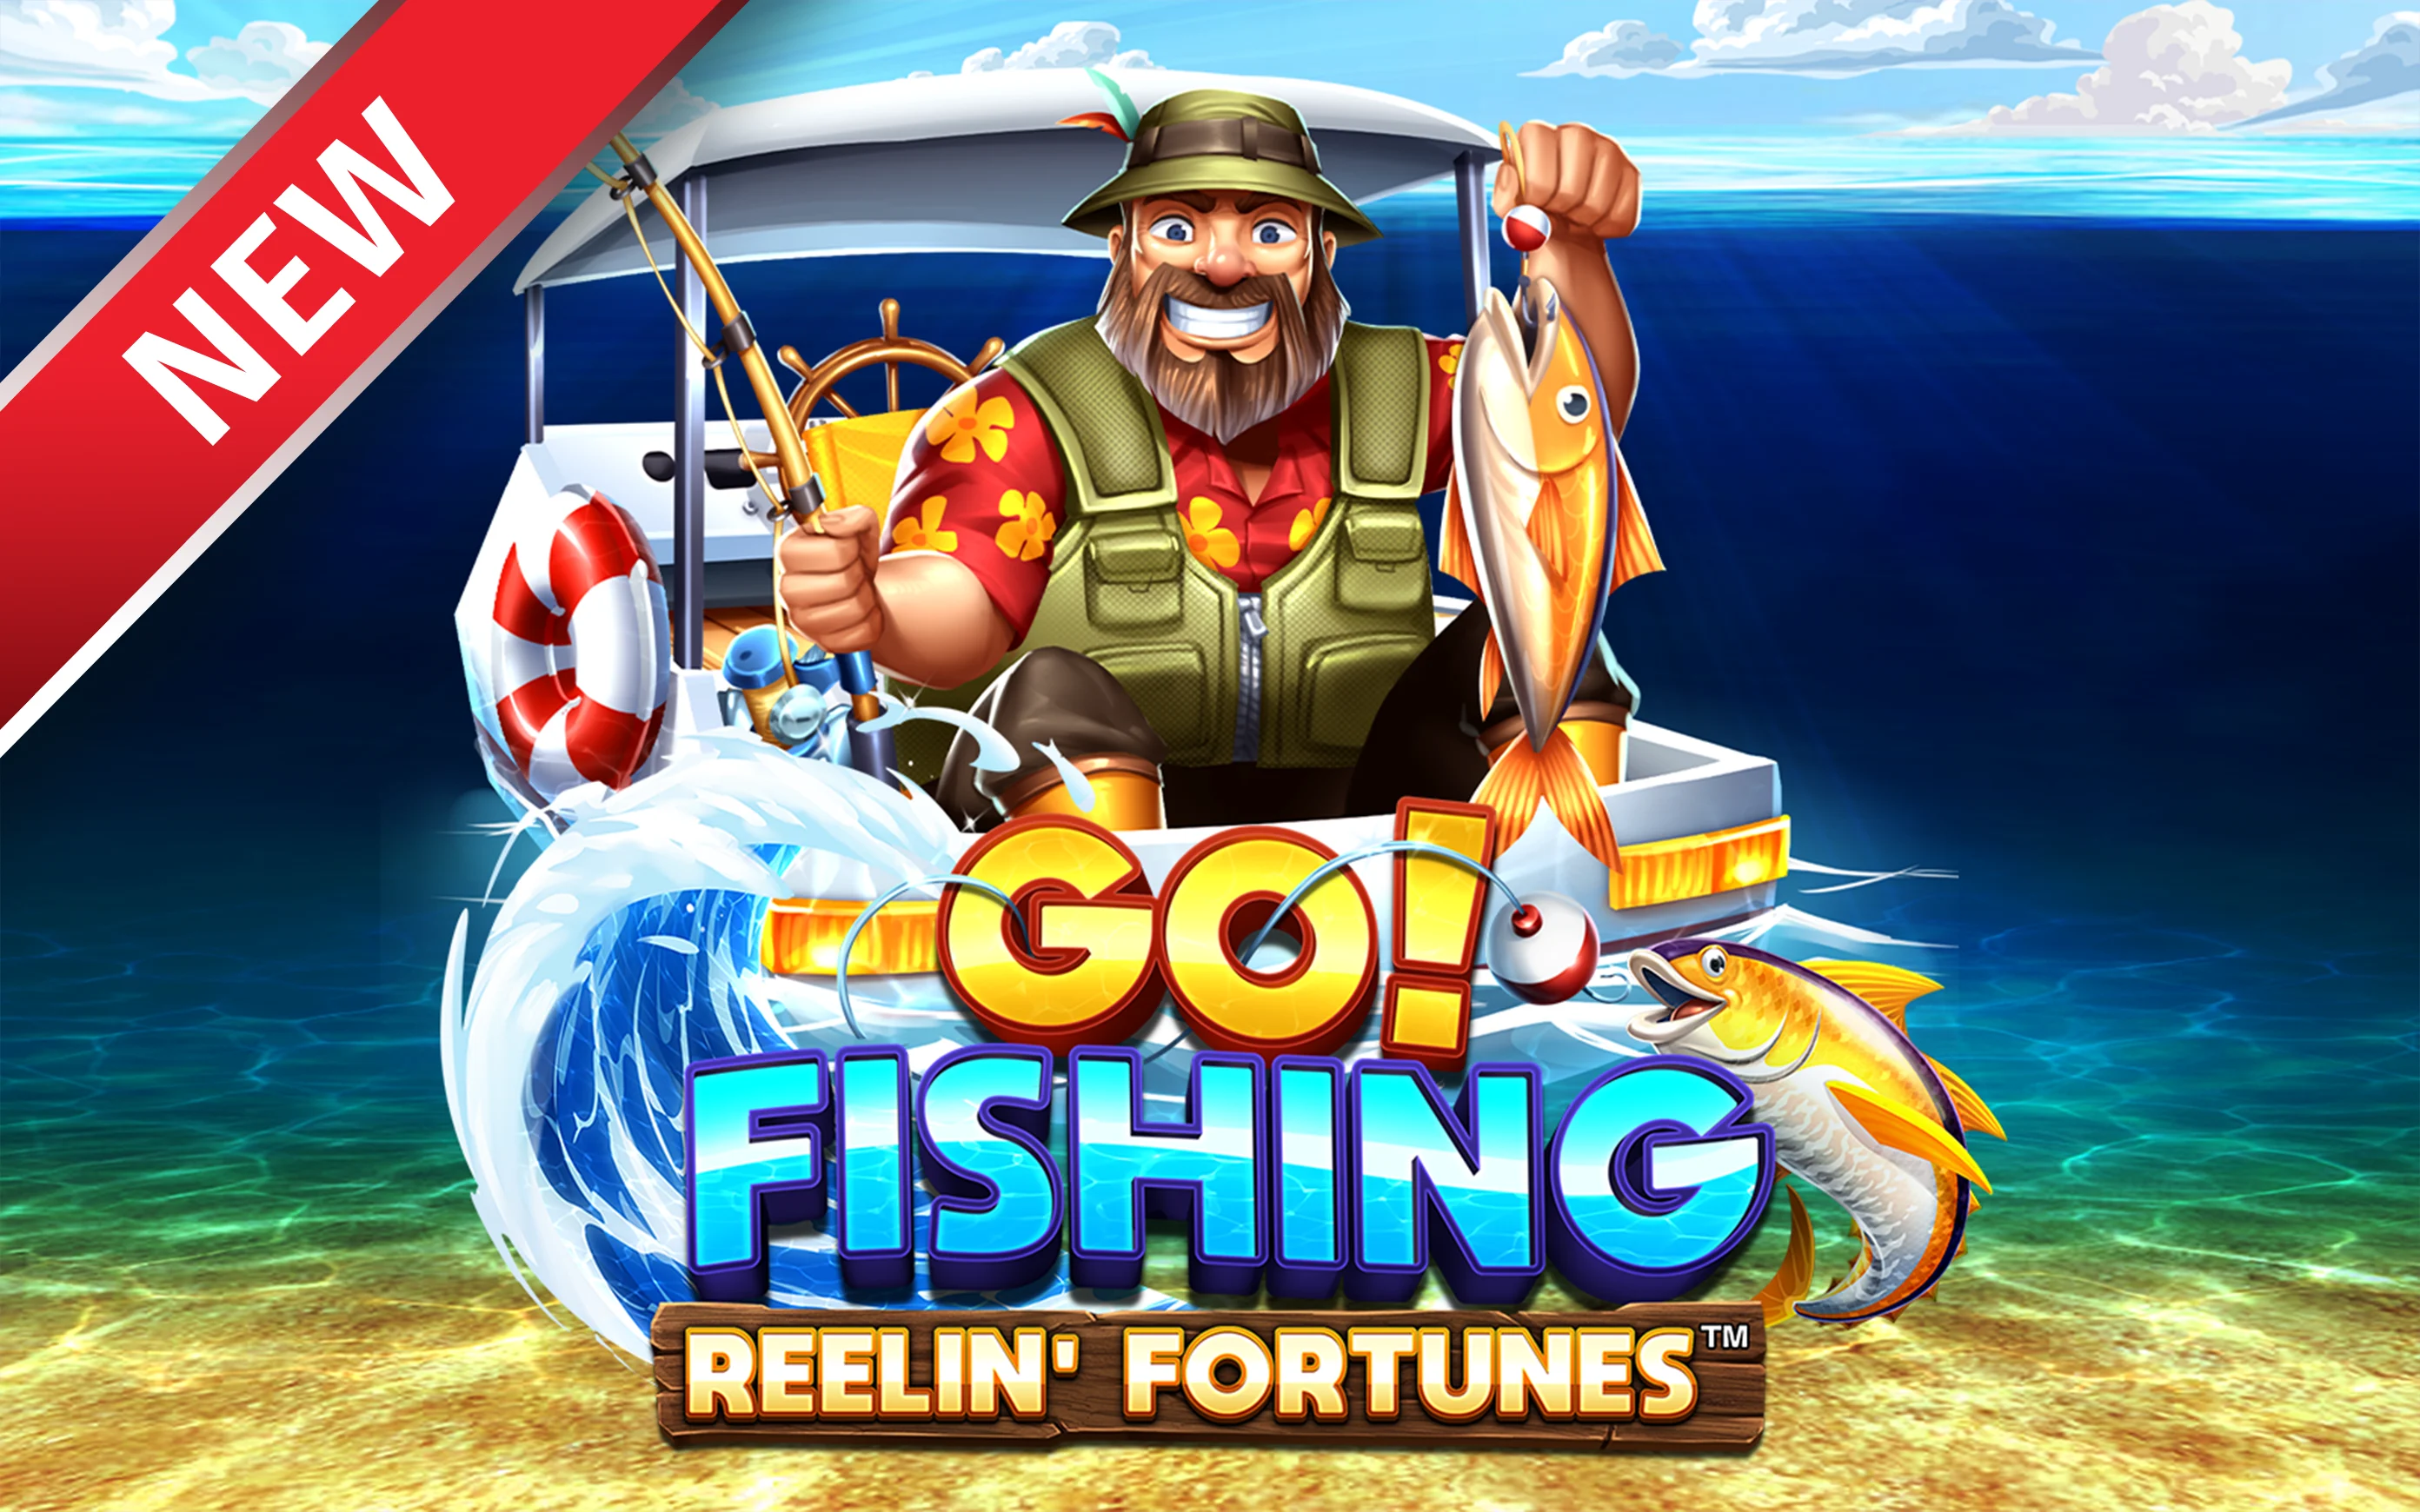 Play Go! Fishing: Reelin' Fortunes™ on Starcasino.be online casino